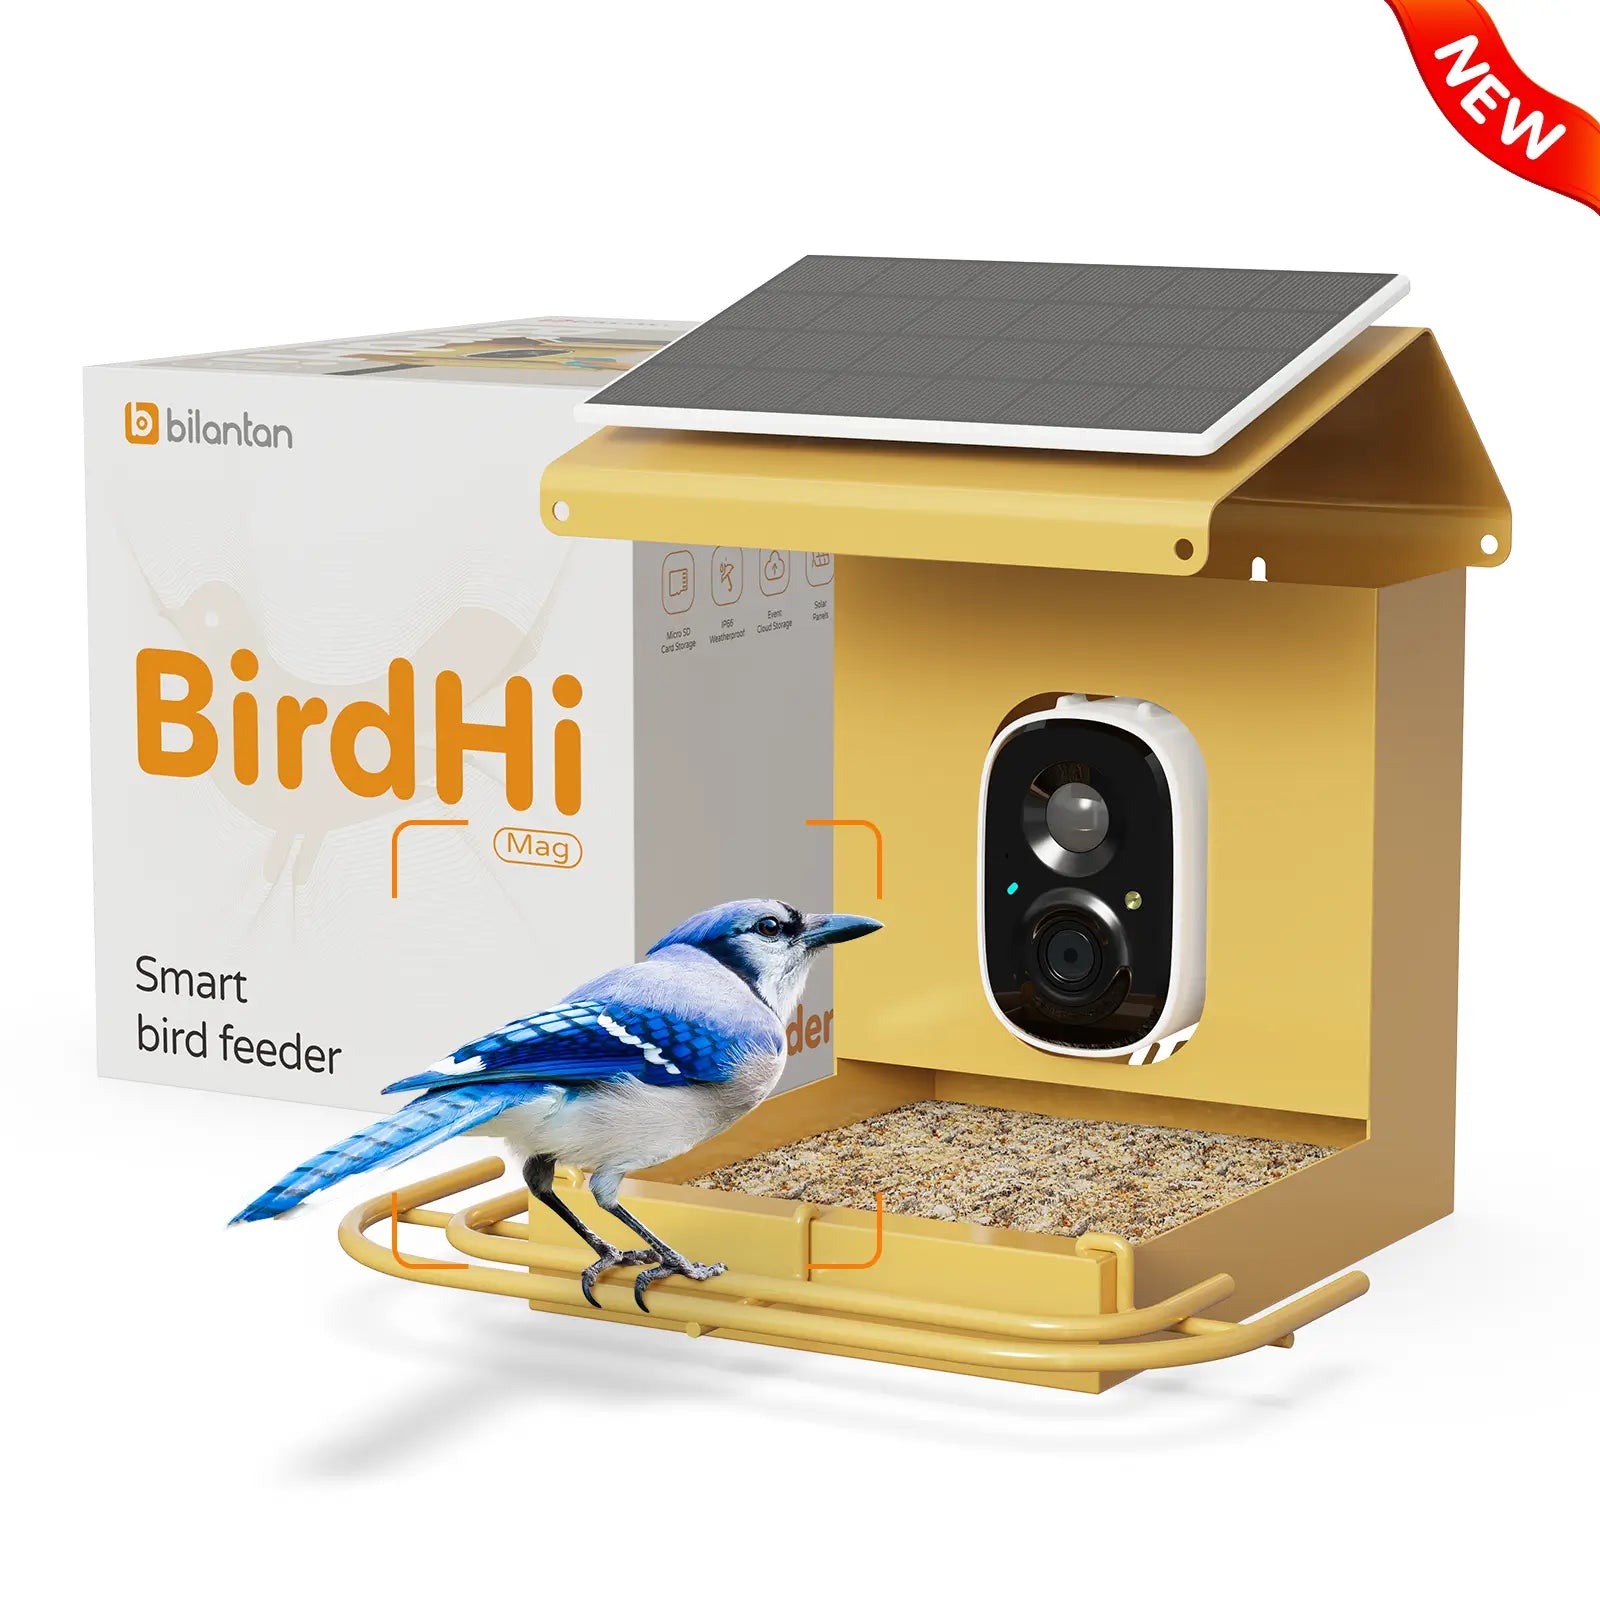 New Bilantan bird feeder BirdHi Mag smart bird feeder with camera new